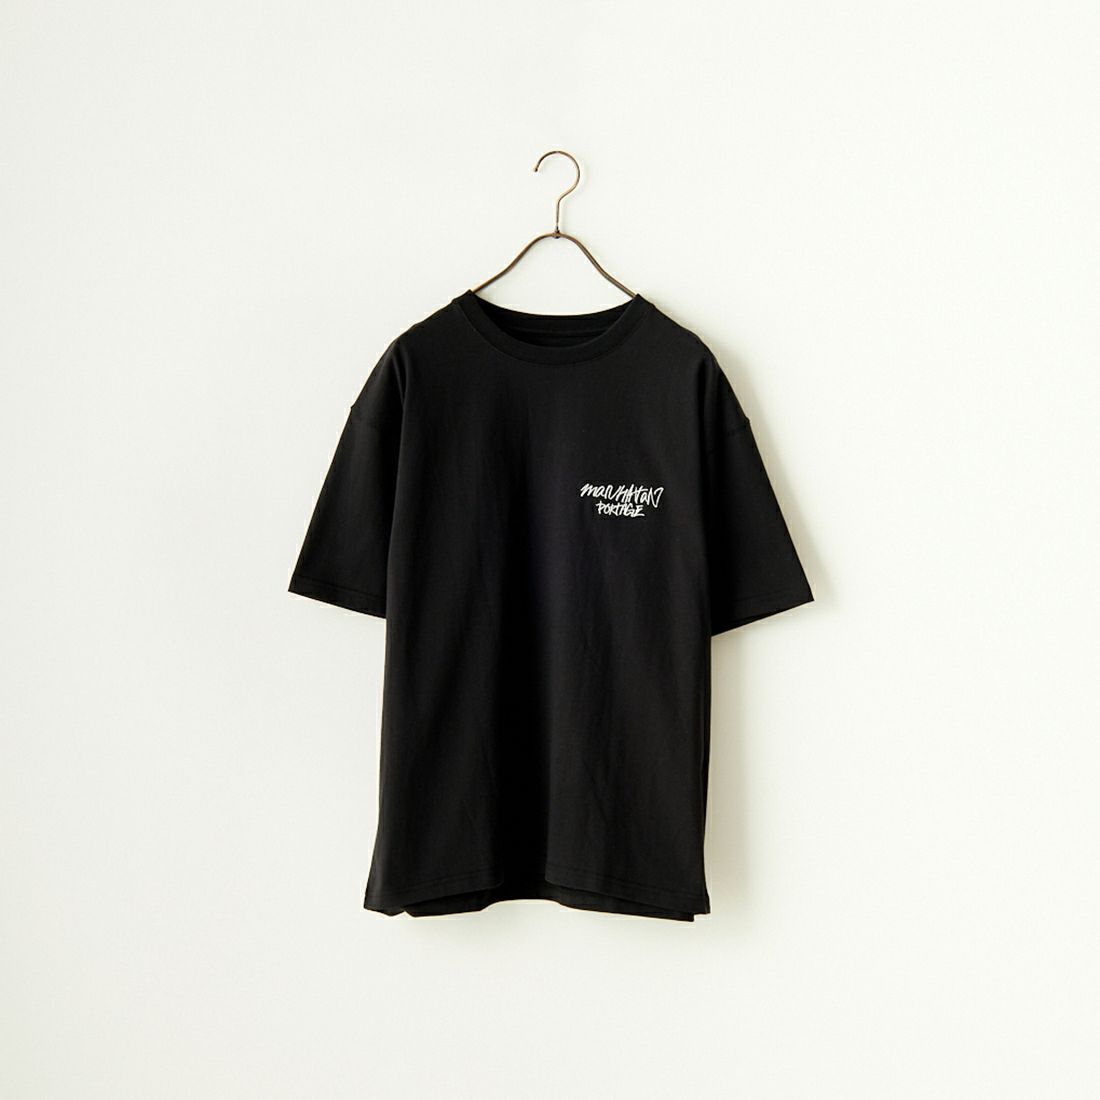 MANHATTAN PORTAGE [マンハッタンポーテージ] 別注 手書き風バックプリントTシャツ [24SSMP-IN49-JF] BLACK